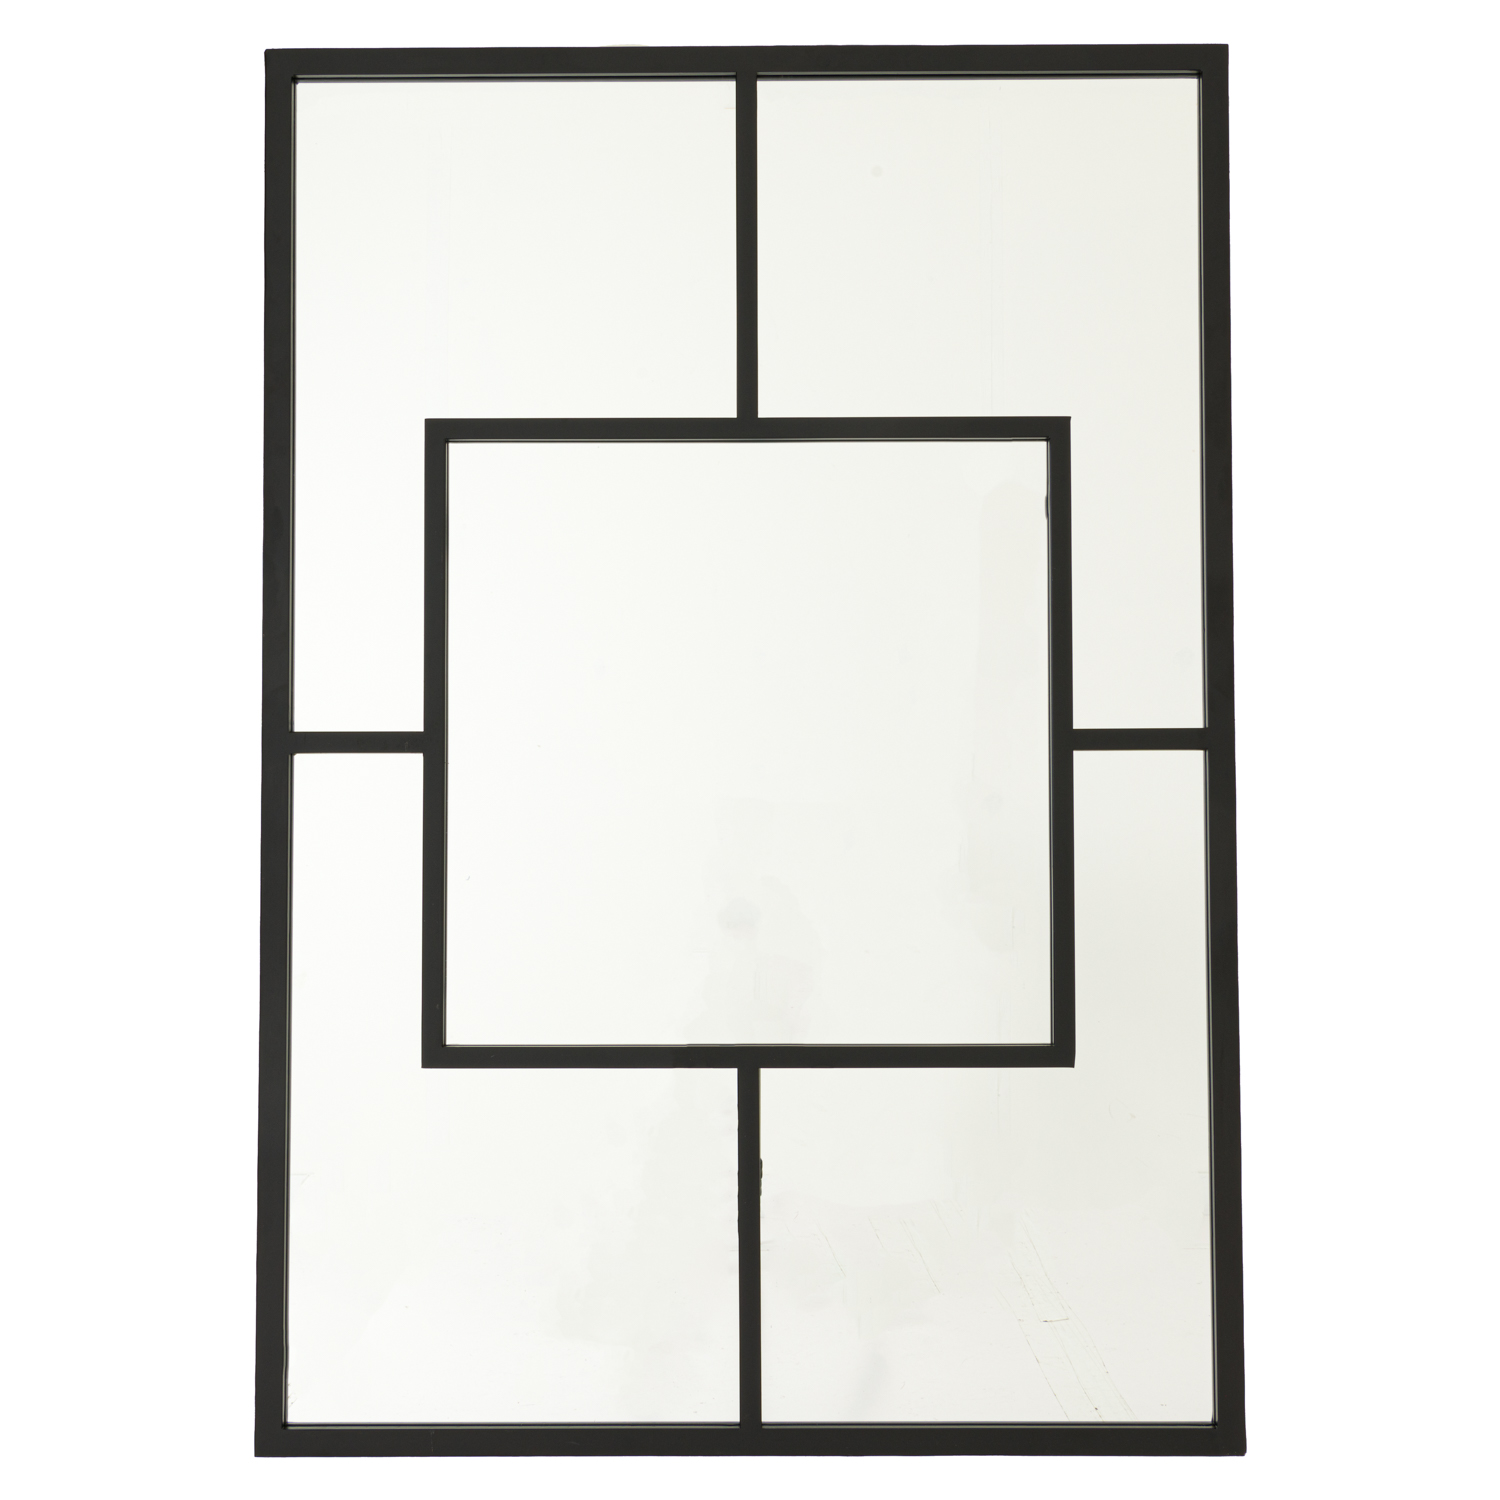 Black Multi Paned Patterned Window Mirror - Image 1